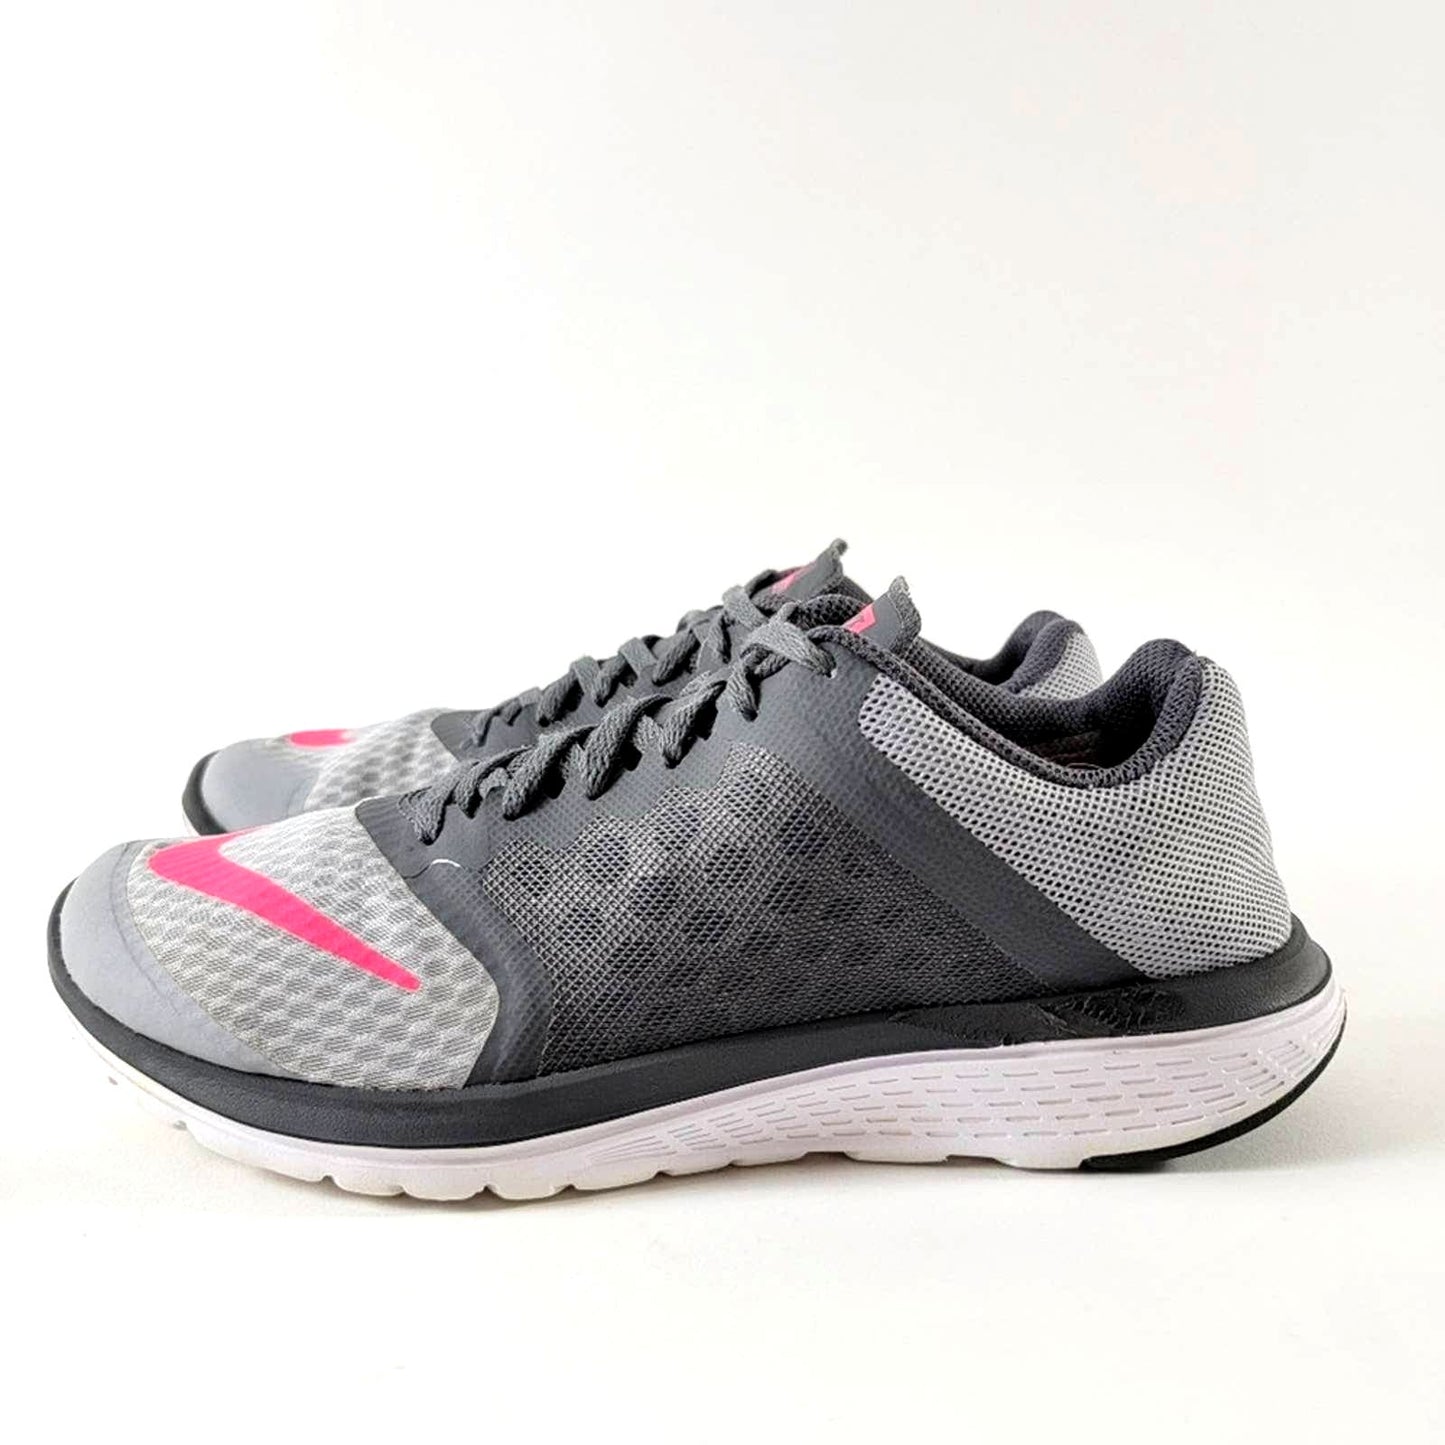 Nike FS Lite Run 3 Running Shoes - 8